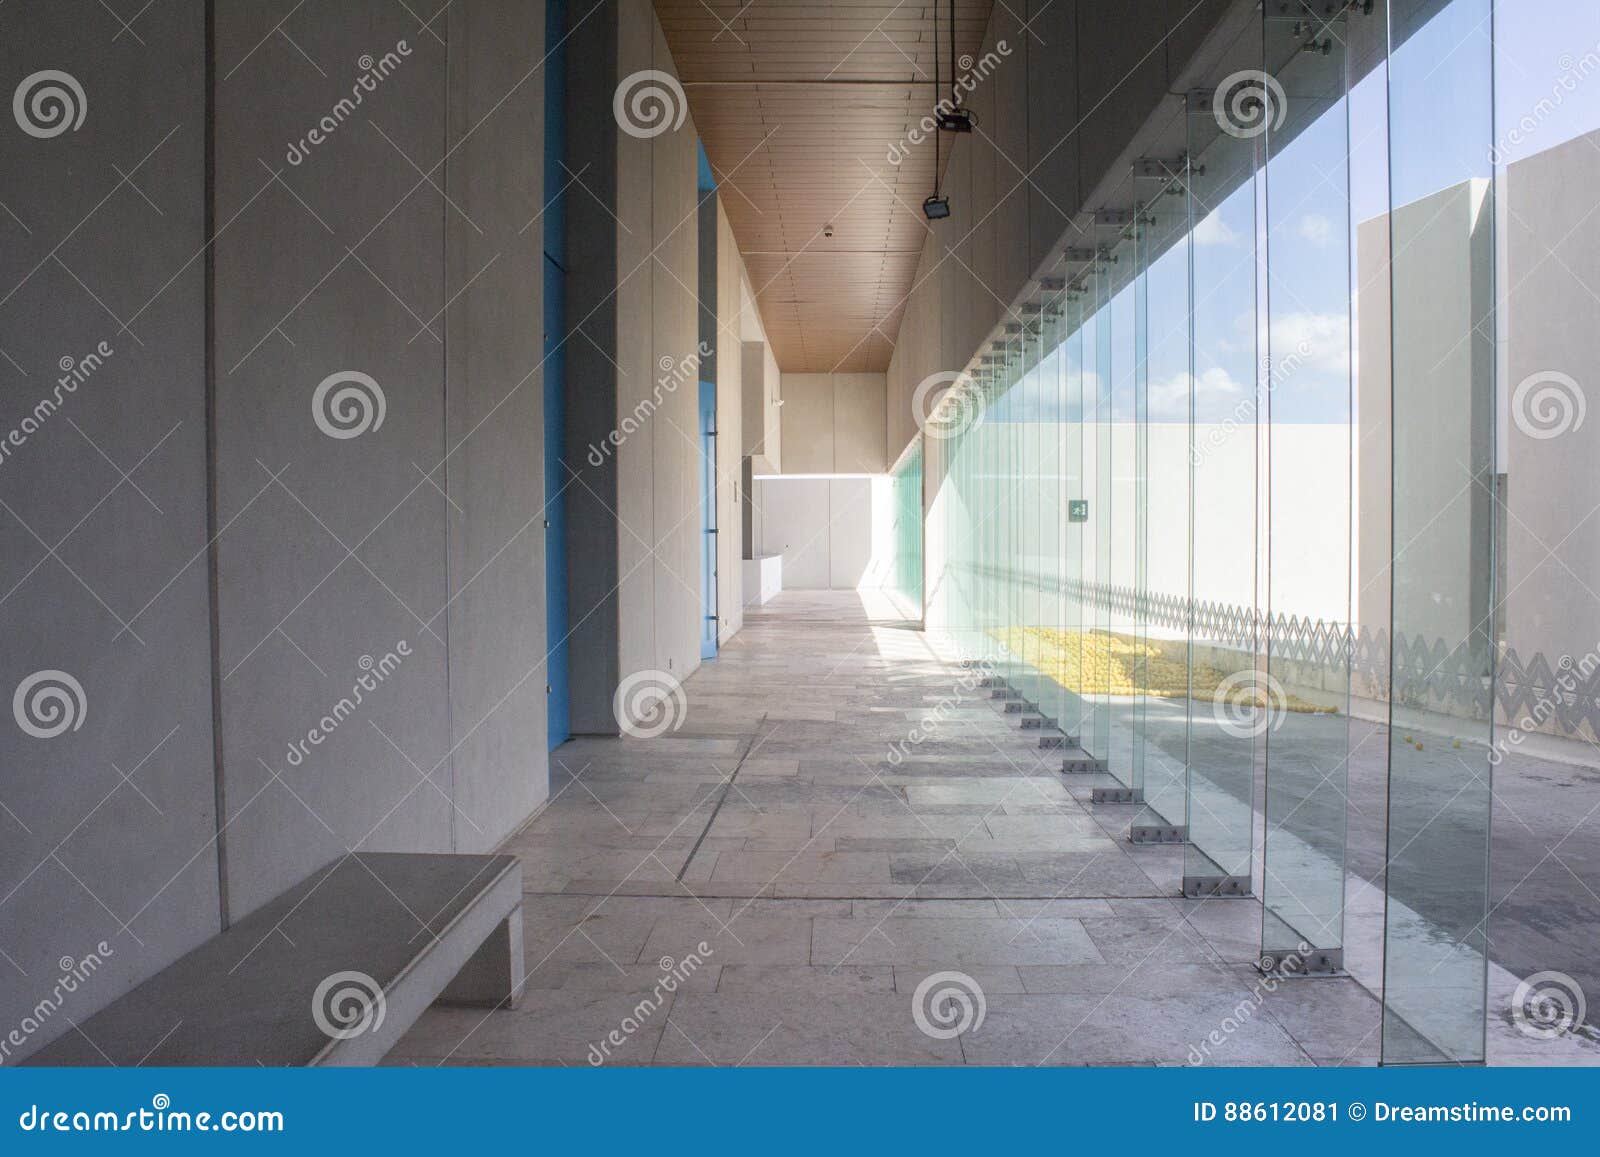 hall with glass wall